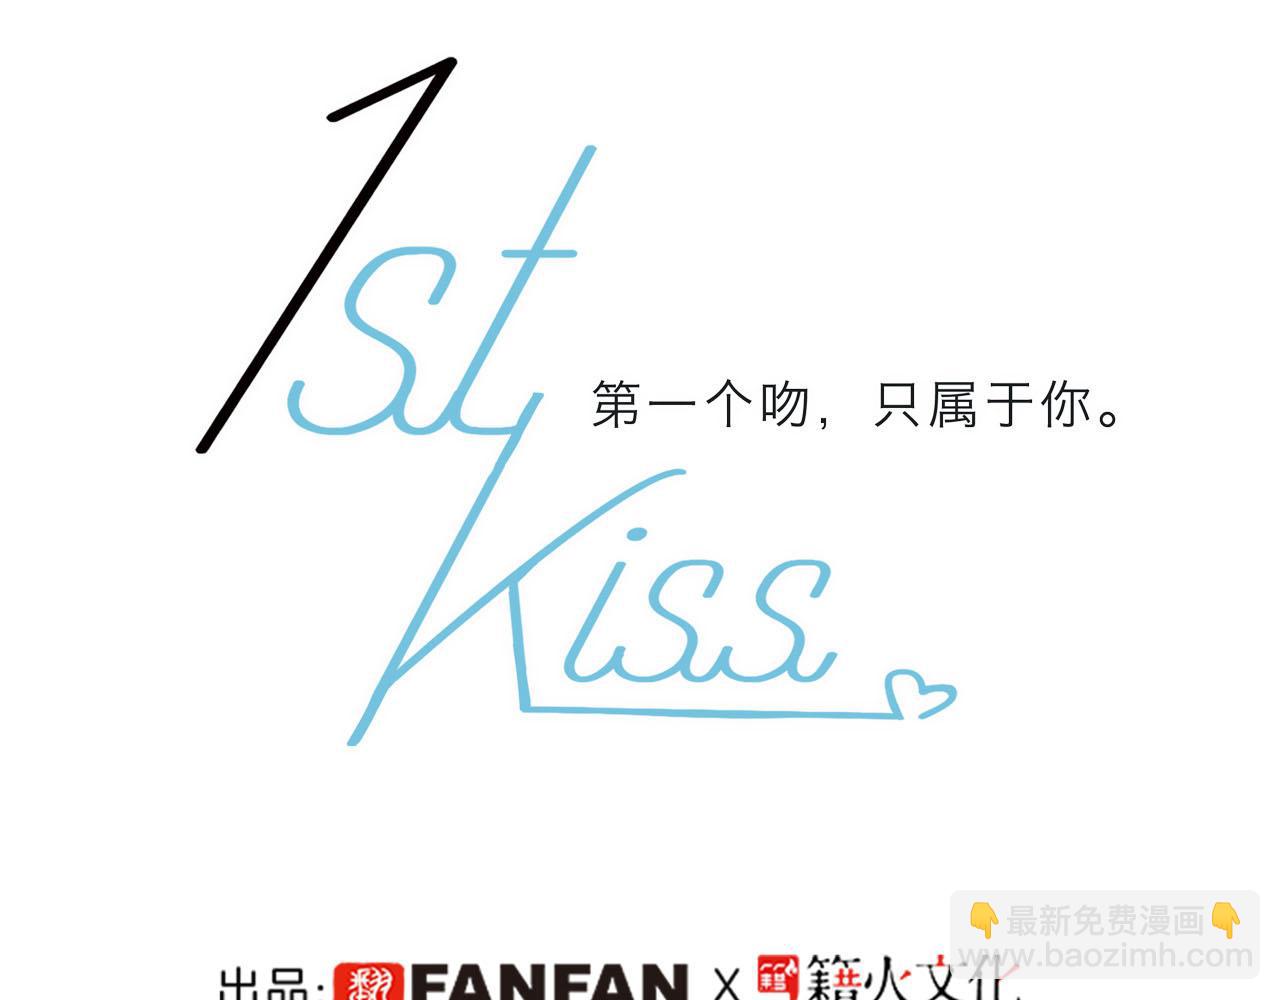 1st Kiss - 51：意外惊喜(1/3) - 6